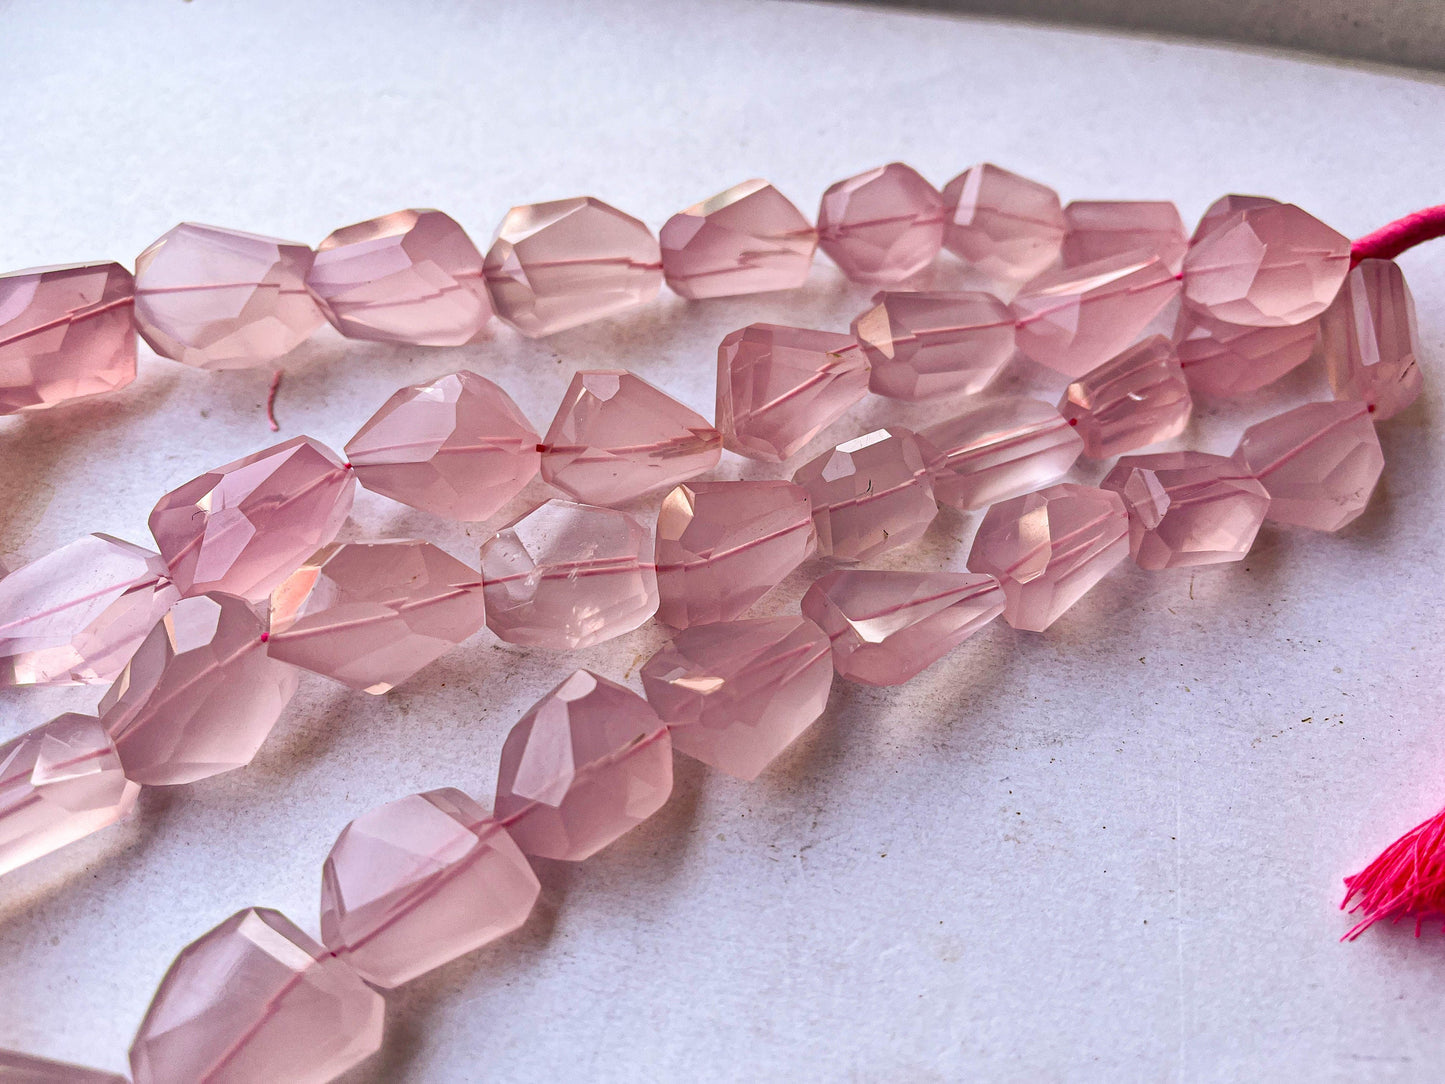 Natural Rose Quartz Faceted Tumble Shape Beads, 16 Inch